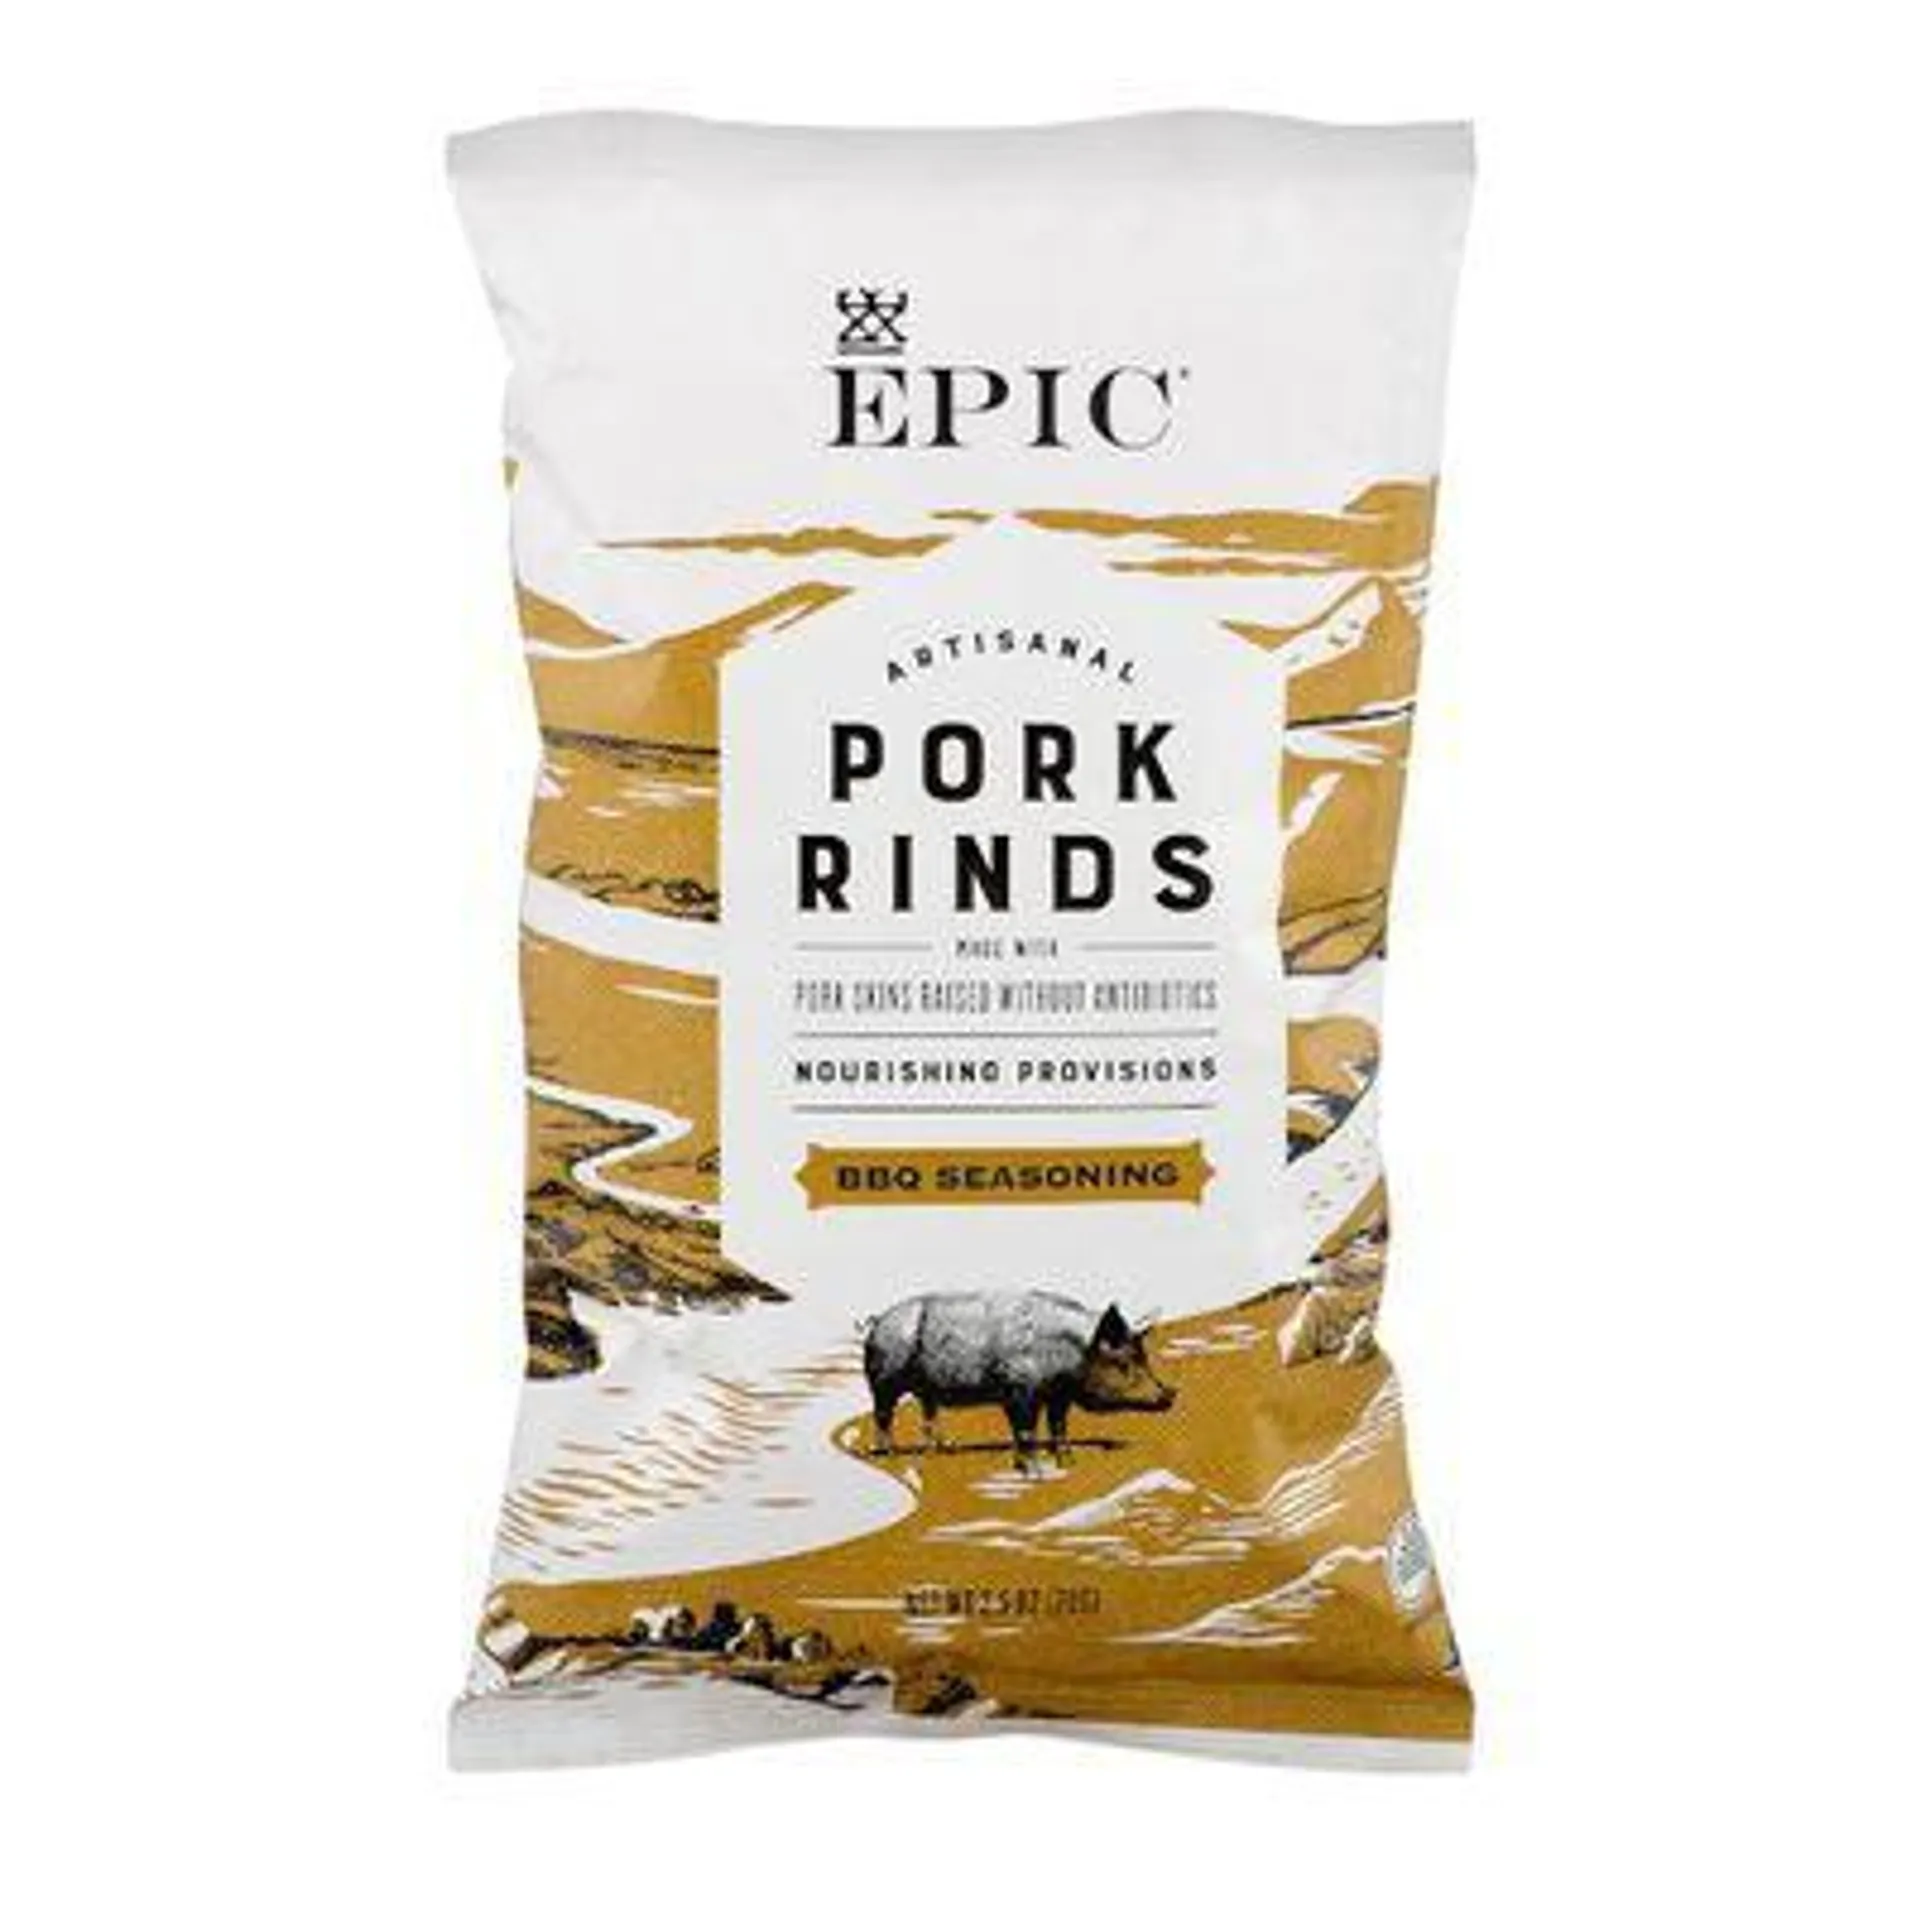 EPIC Artisanal Pork Rinds BBQ Seasoning